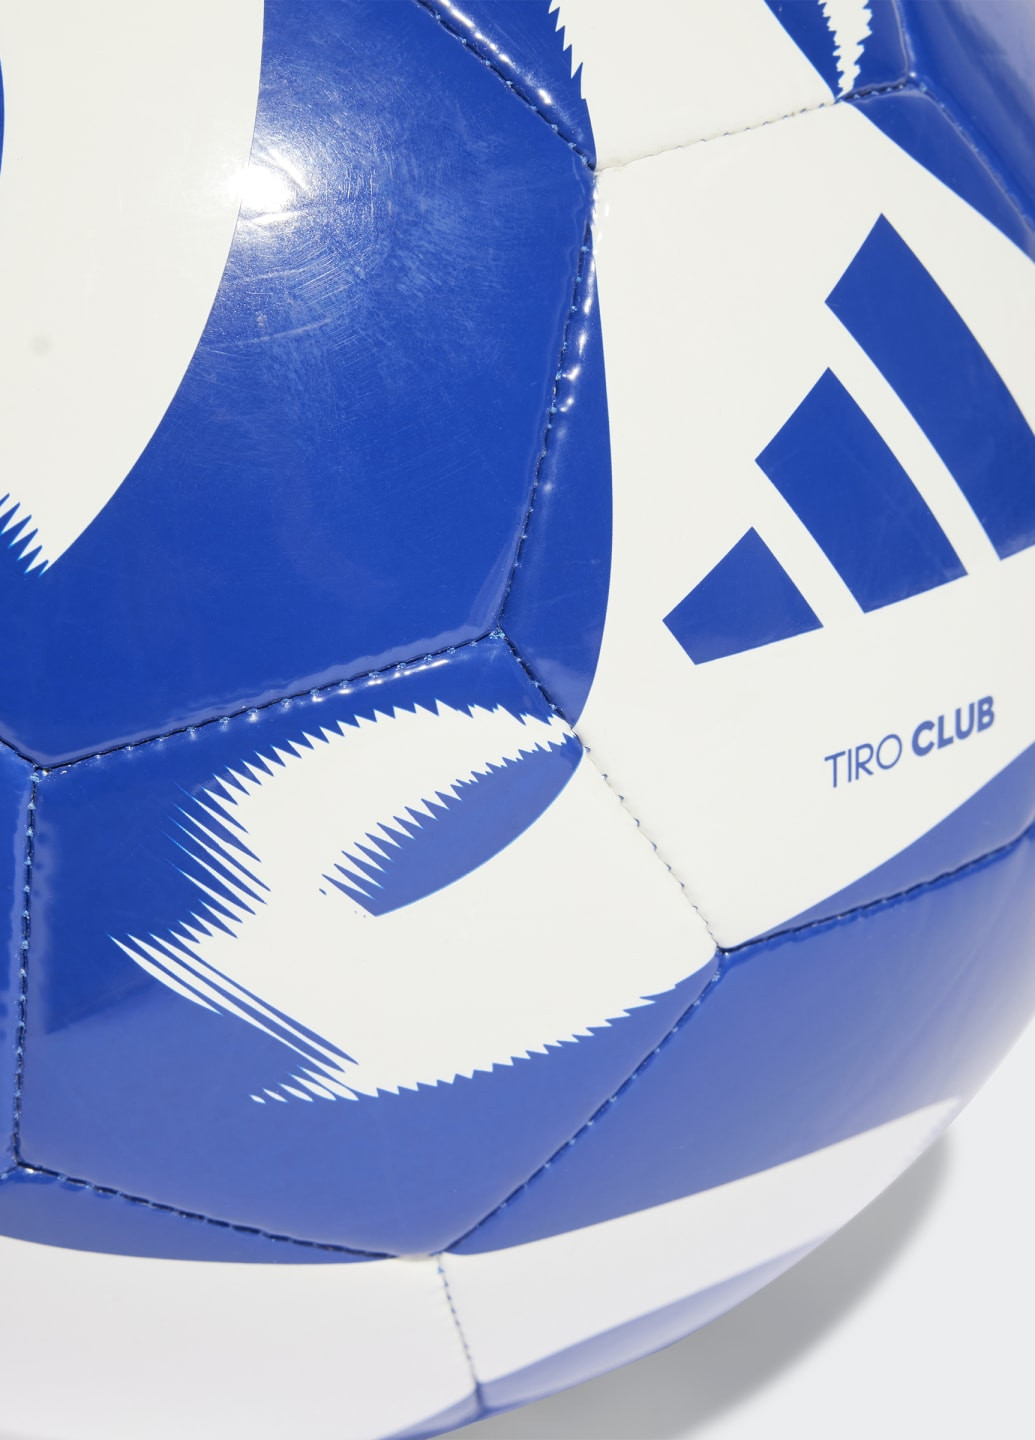 М'яч Tiro Club Football adidas (271956130)